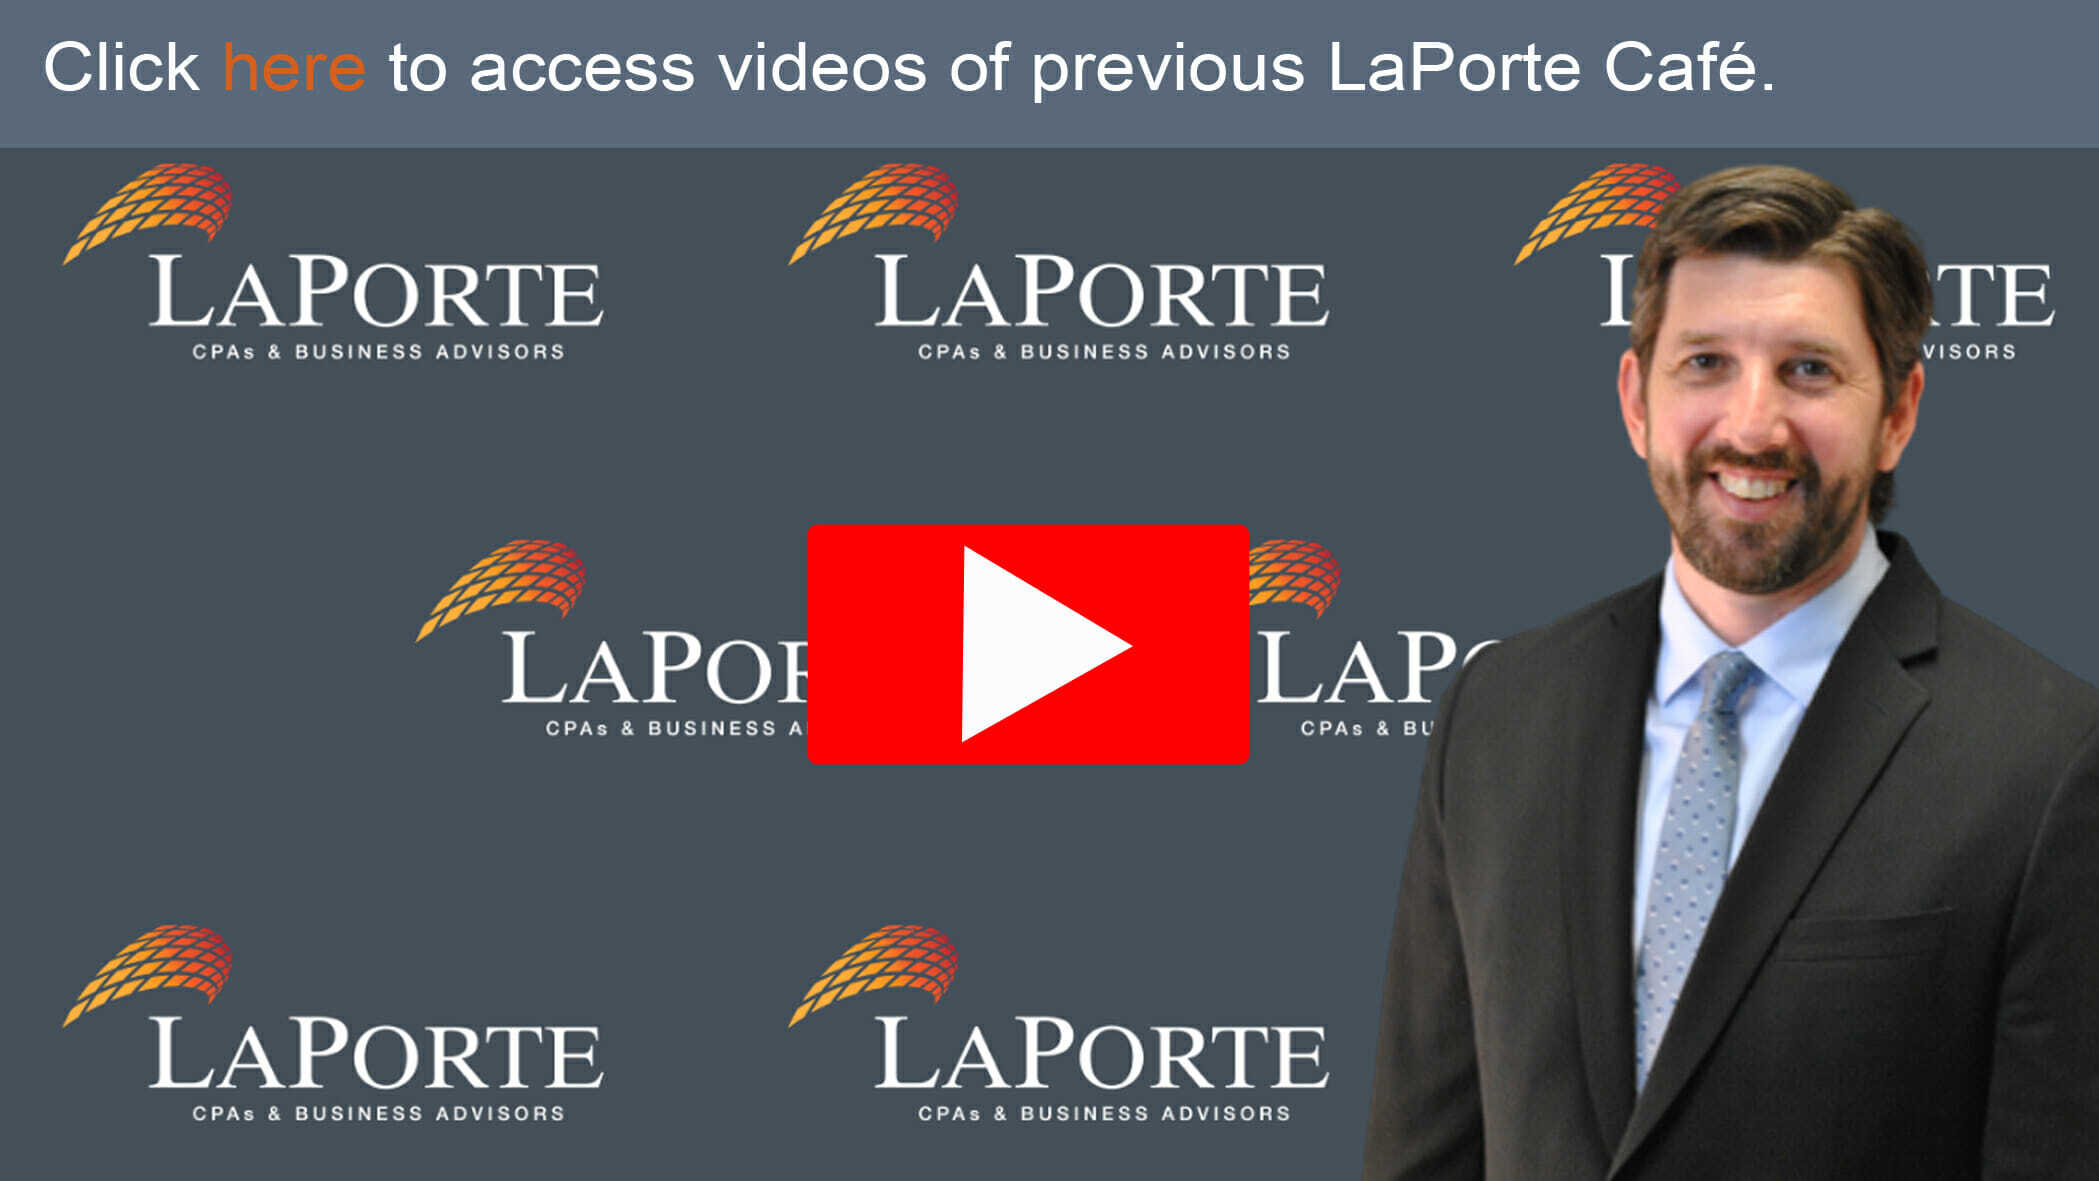 LaPorte Cafe videos